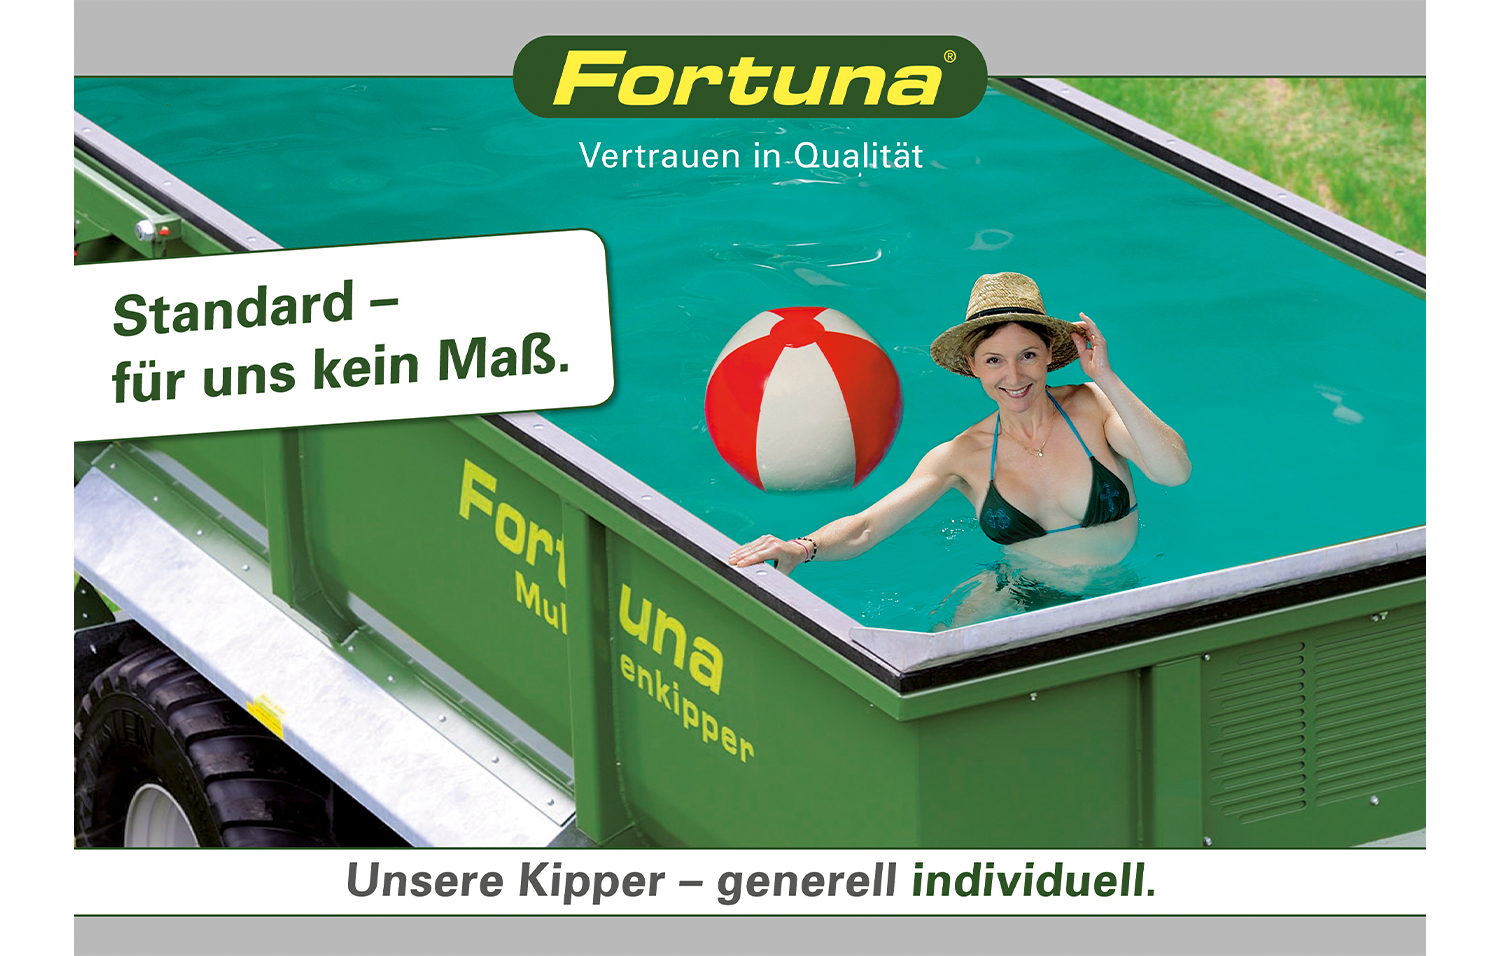 Fortuna Fahrzeugbau: Imageanzeige "Individuelle Fahrzeuge"